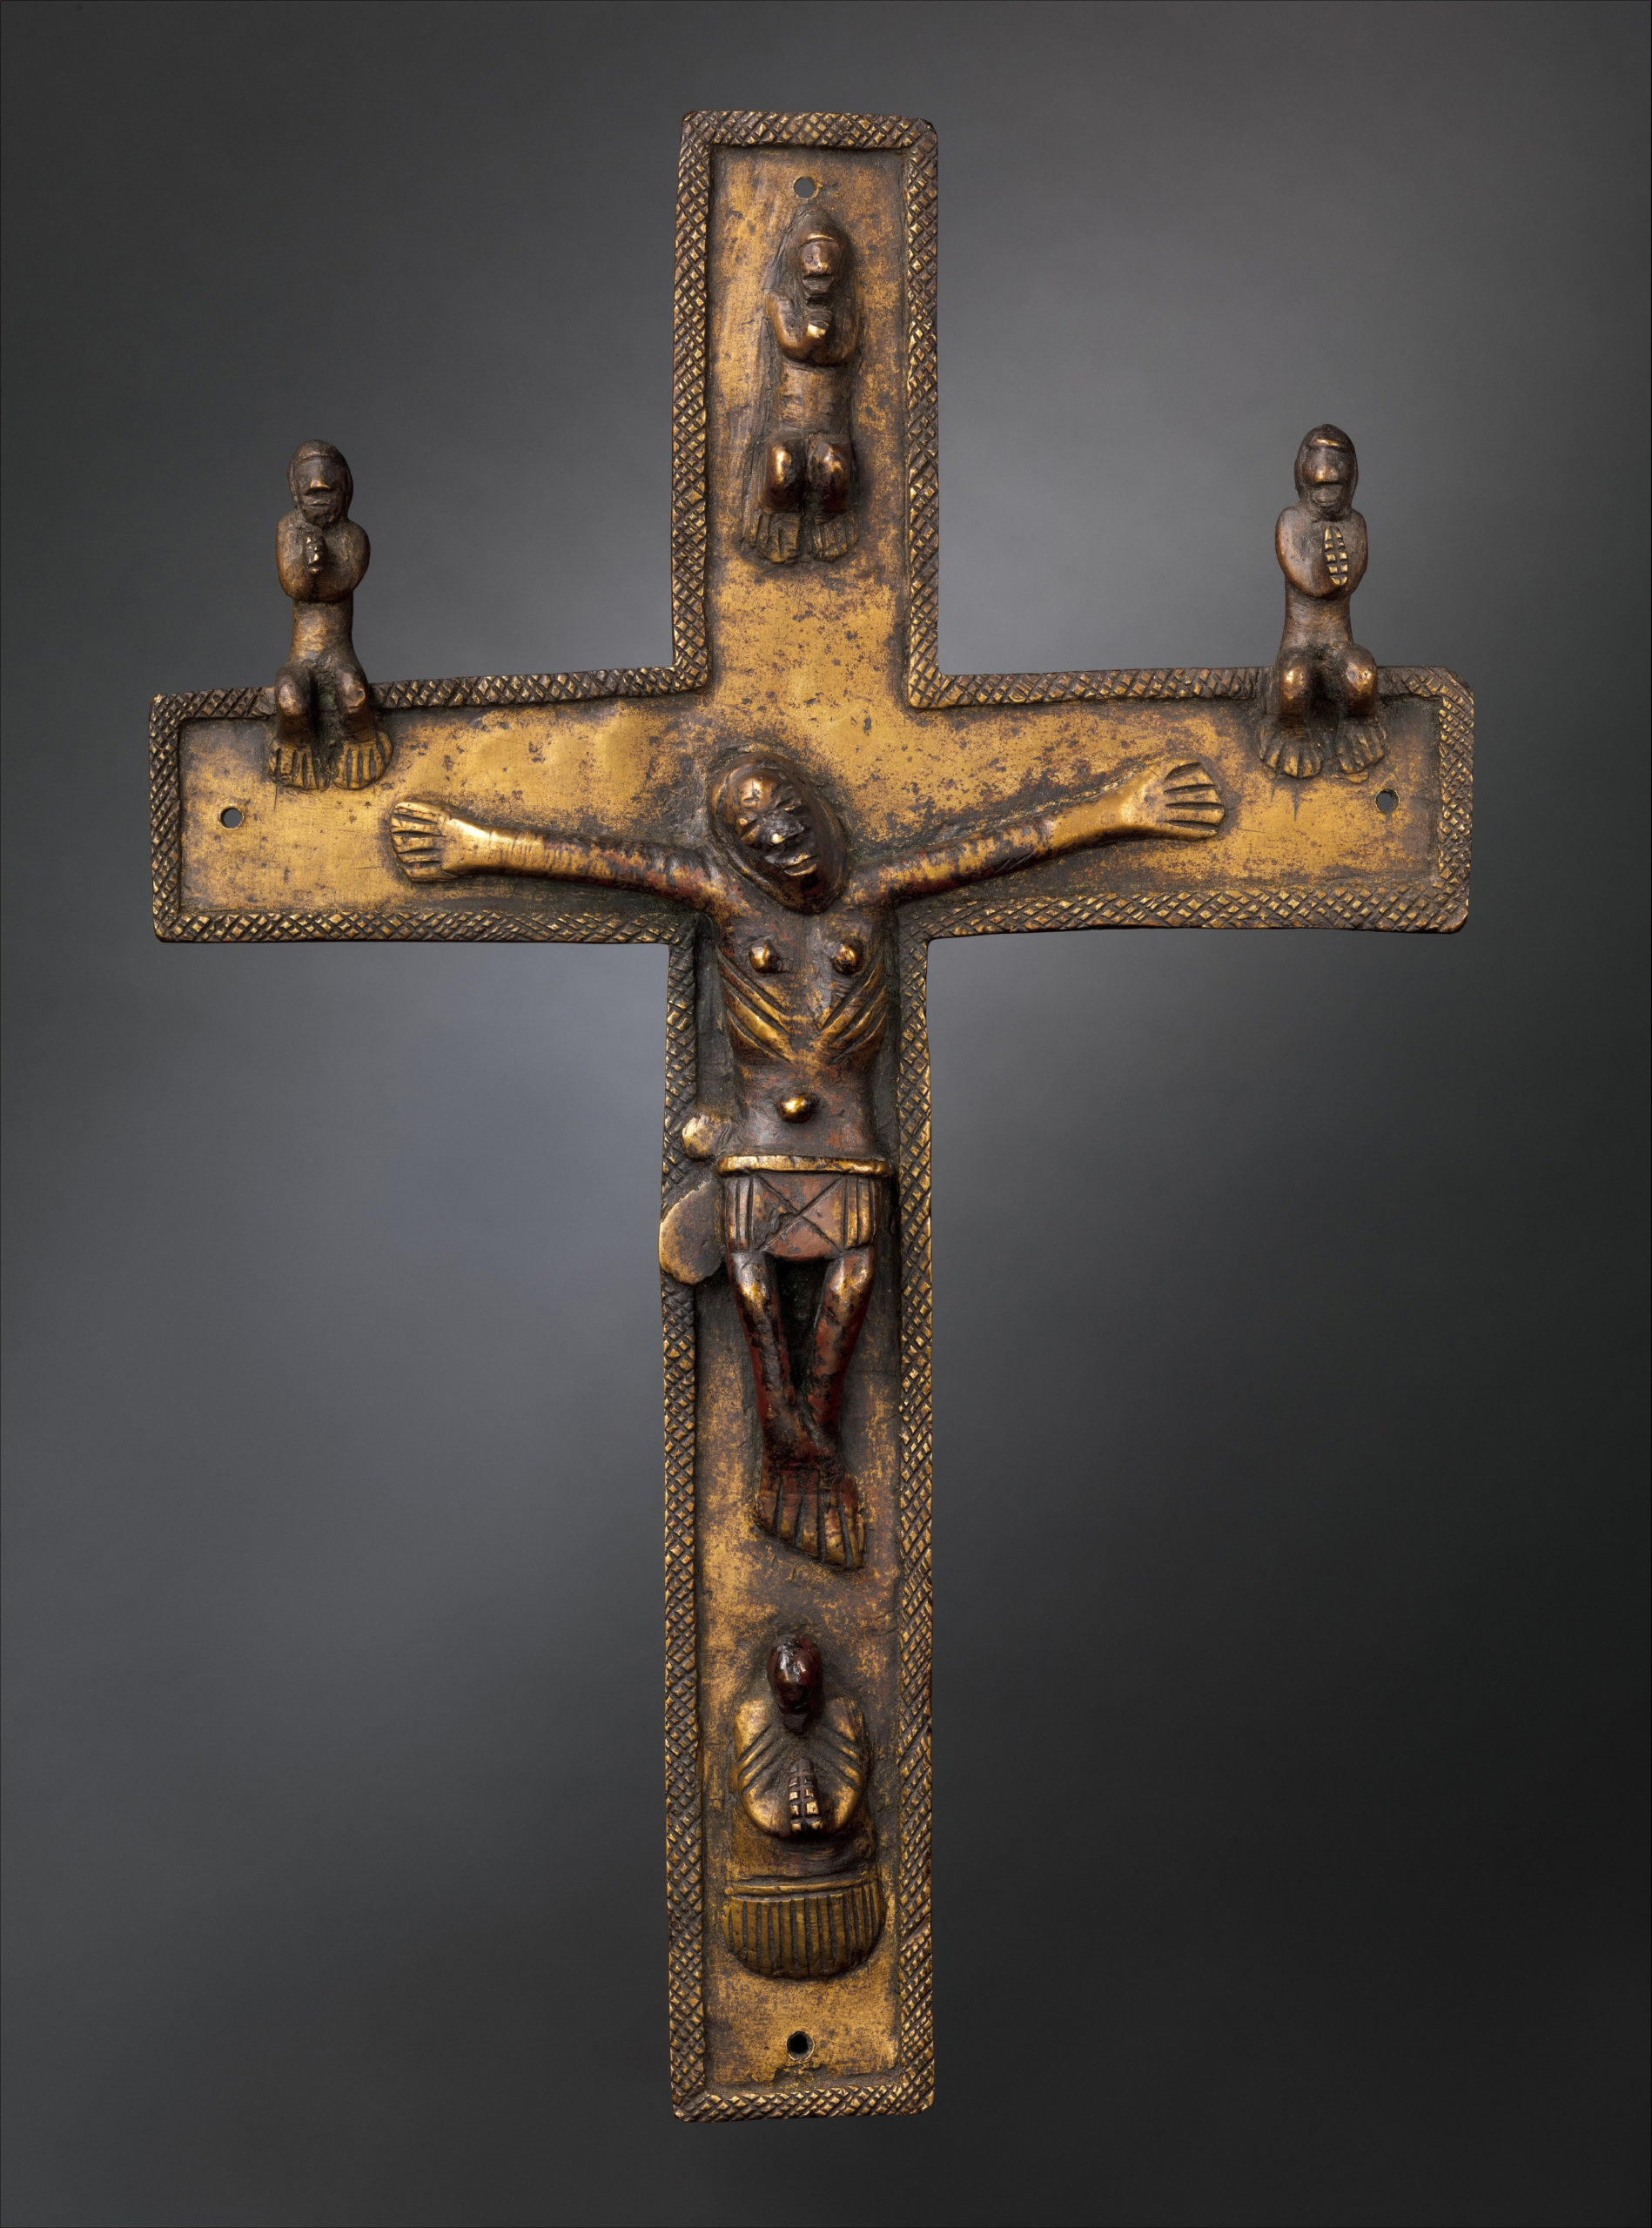 Crucifix, 16th–17th century, Democratic Republic of the Congo, Kongo peoples, solid cast brass, 27.3 cm high (The Metropolitan Museum of Art)